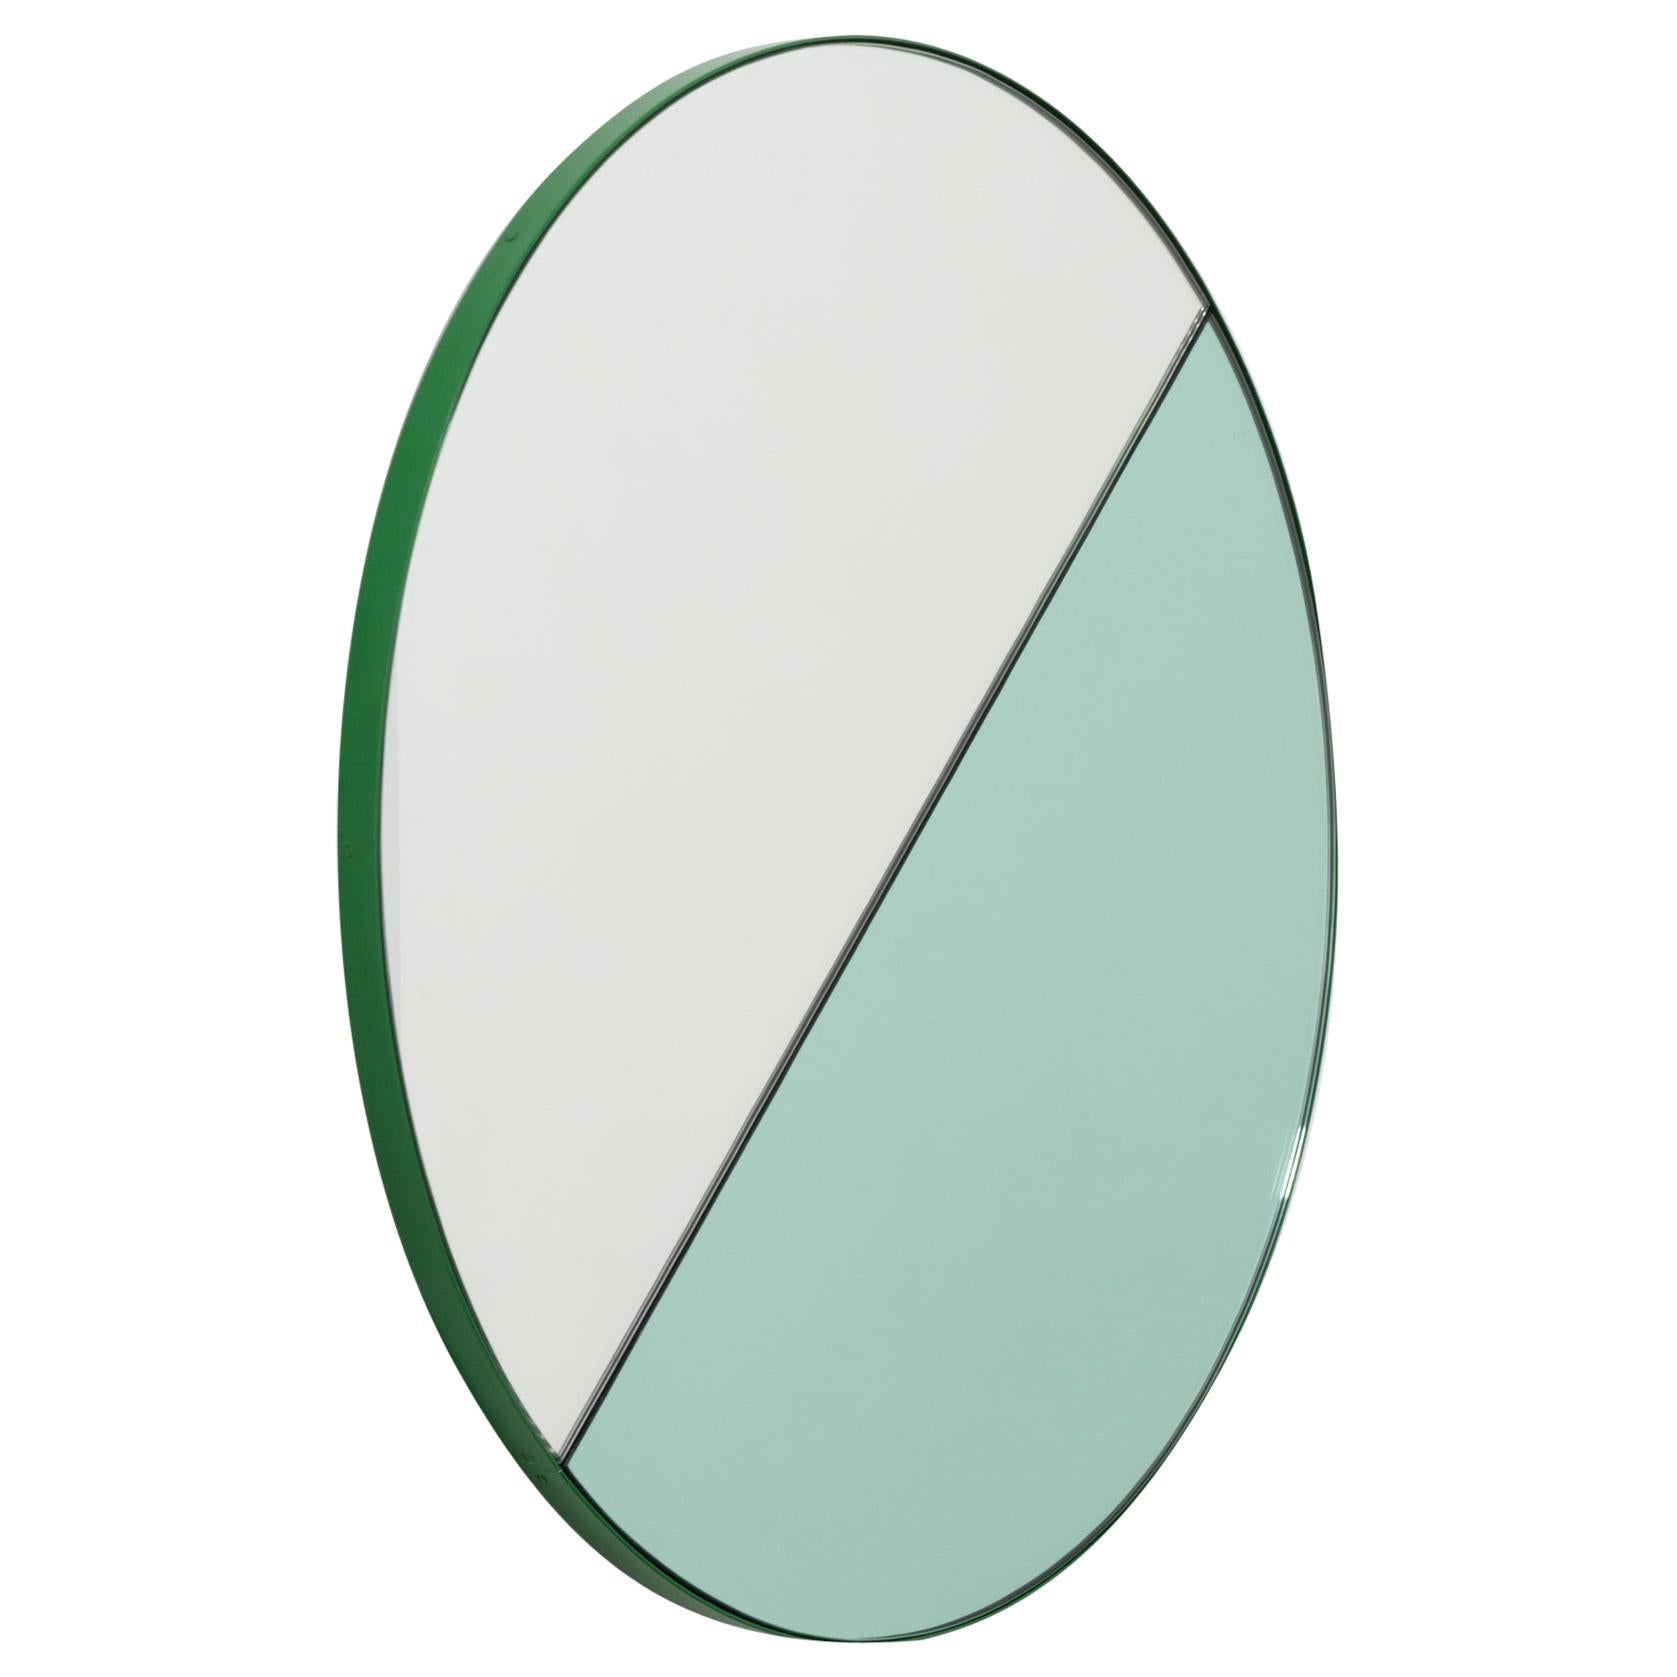 Orbis Dualis Mixed 'Green + Silver' Round Mirror with Green Frame, Medium